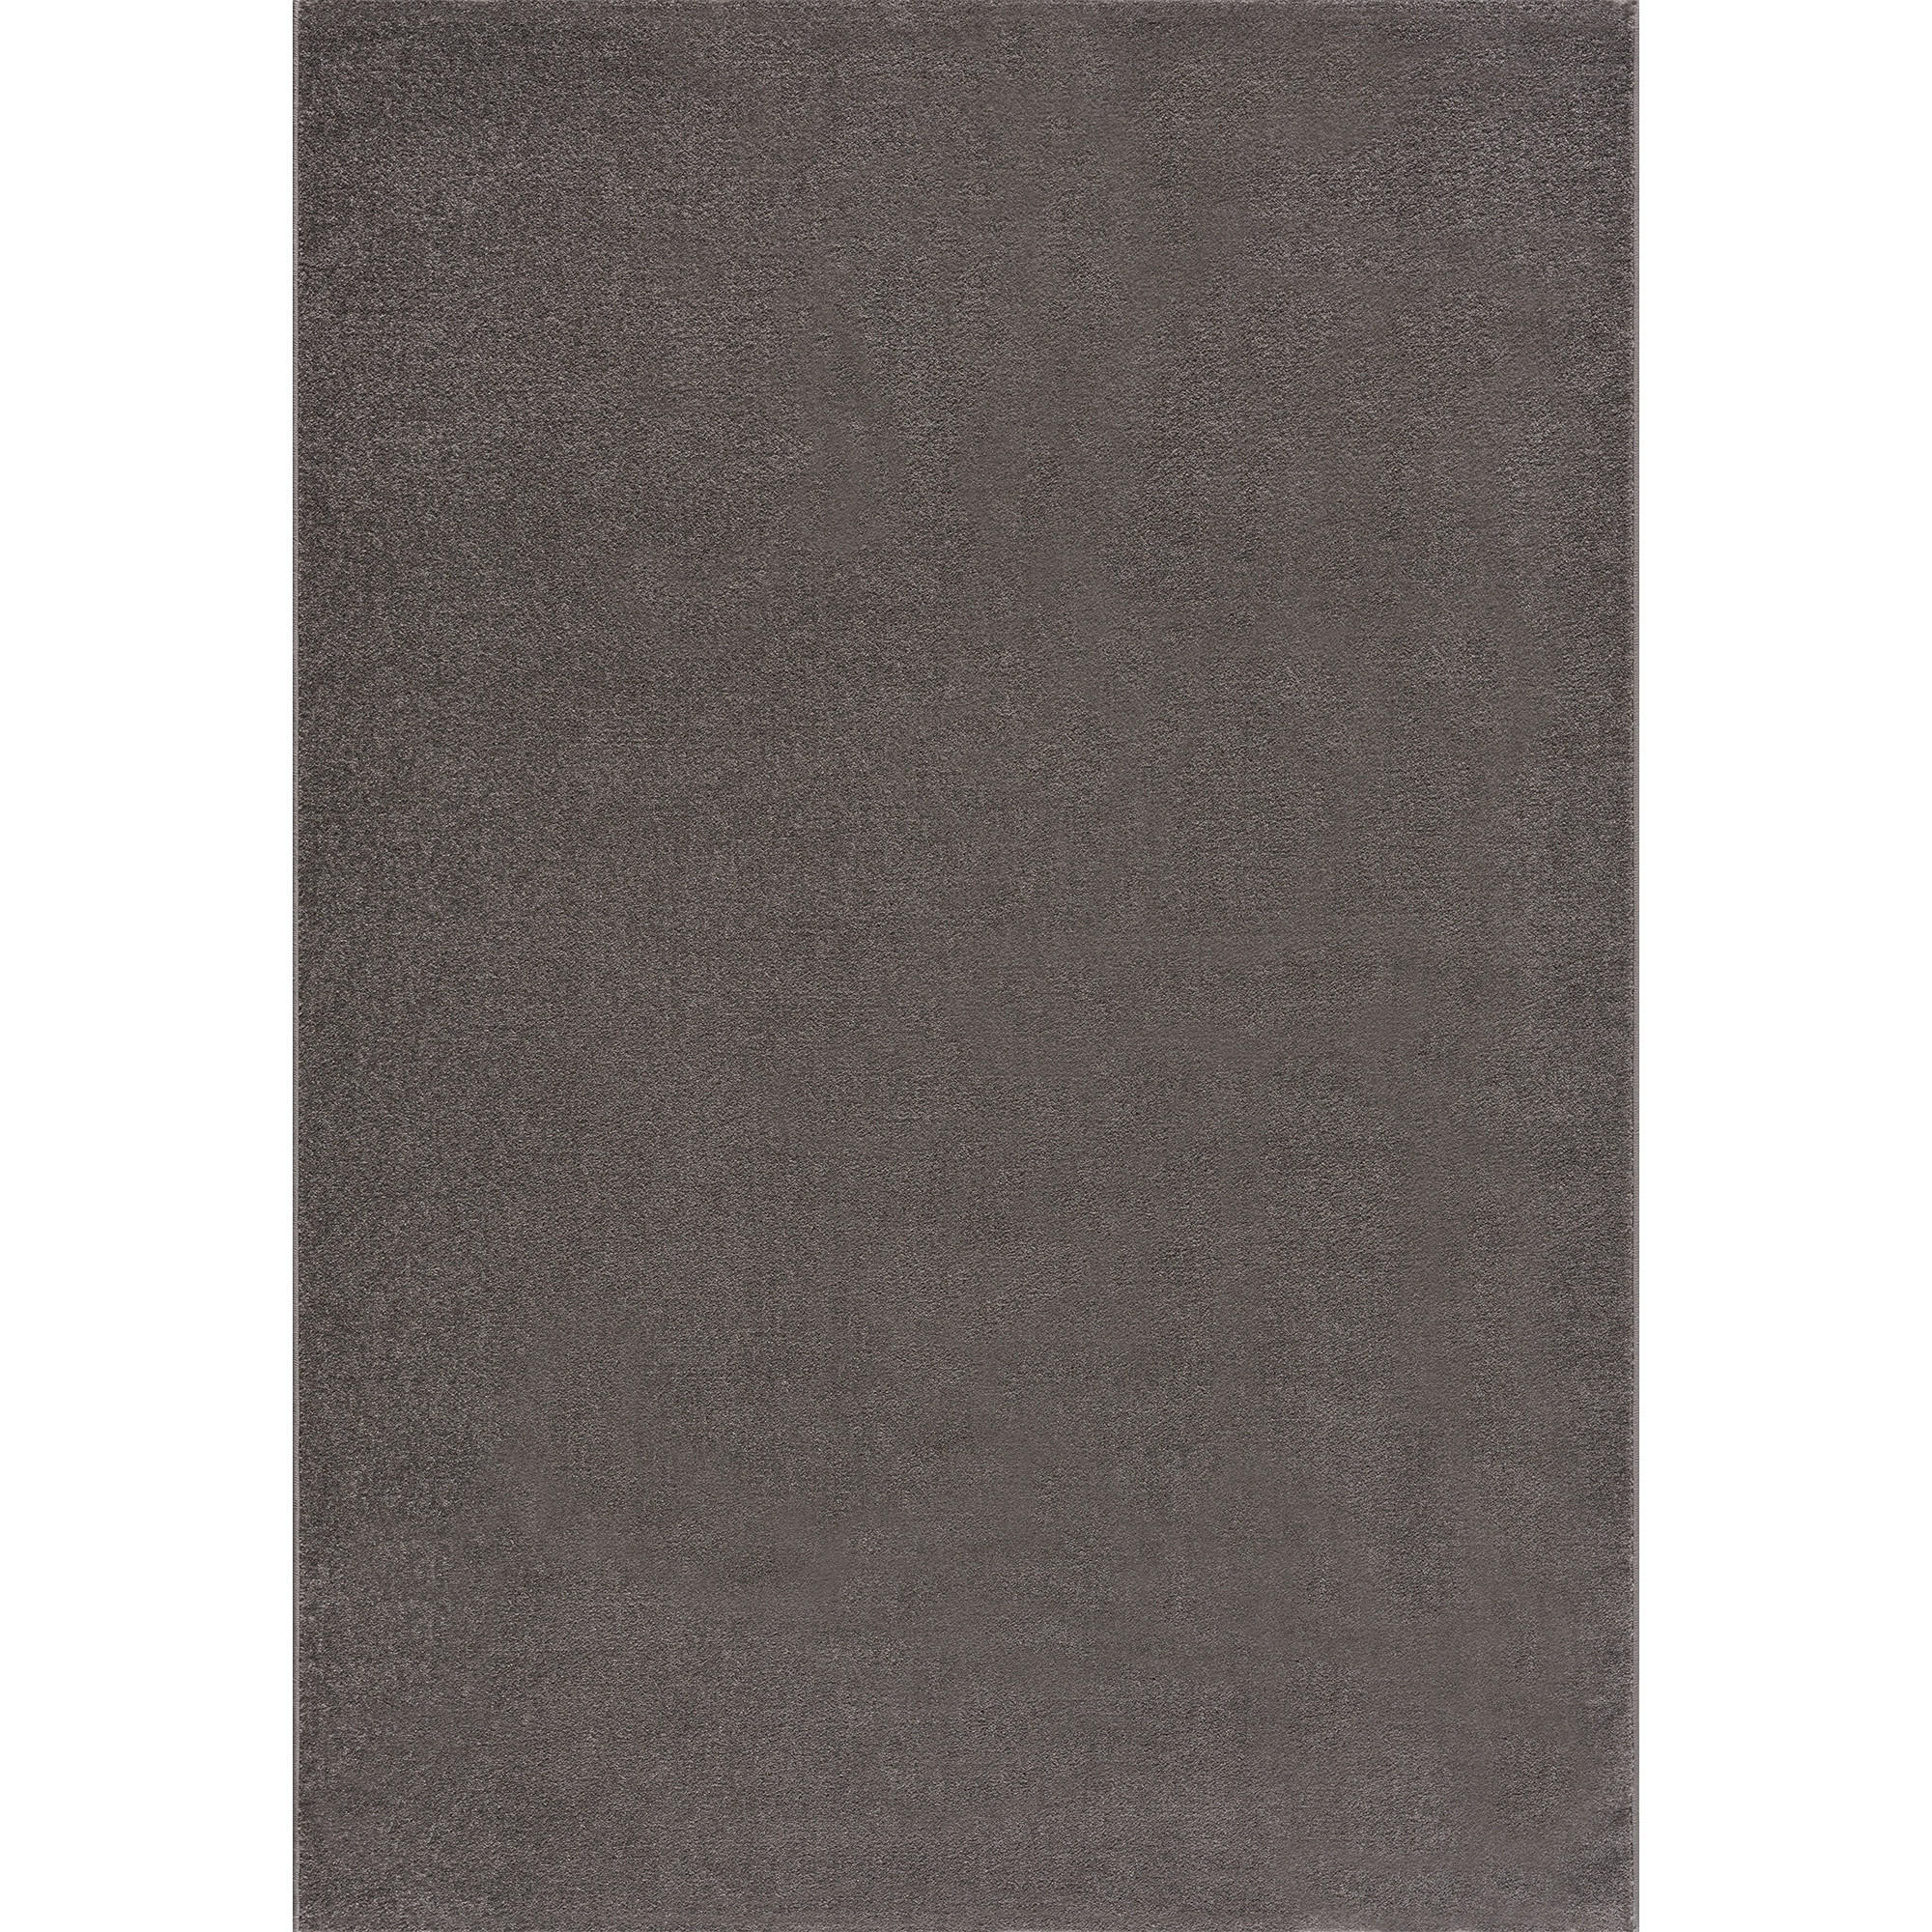 WEBTEPPICH 80/150 cm Uni  - Grau, LIFESTYLE, Kunststoff/Textil (80/150cm) - Novel